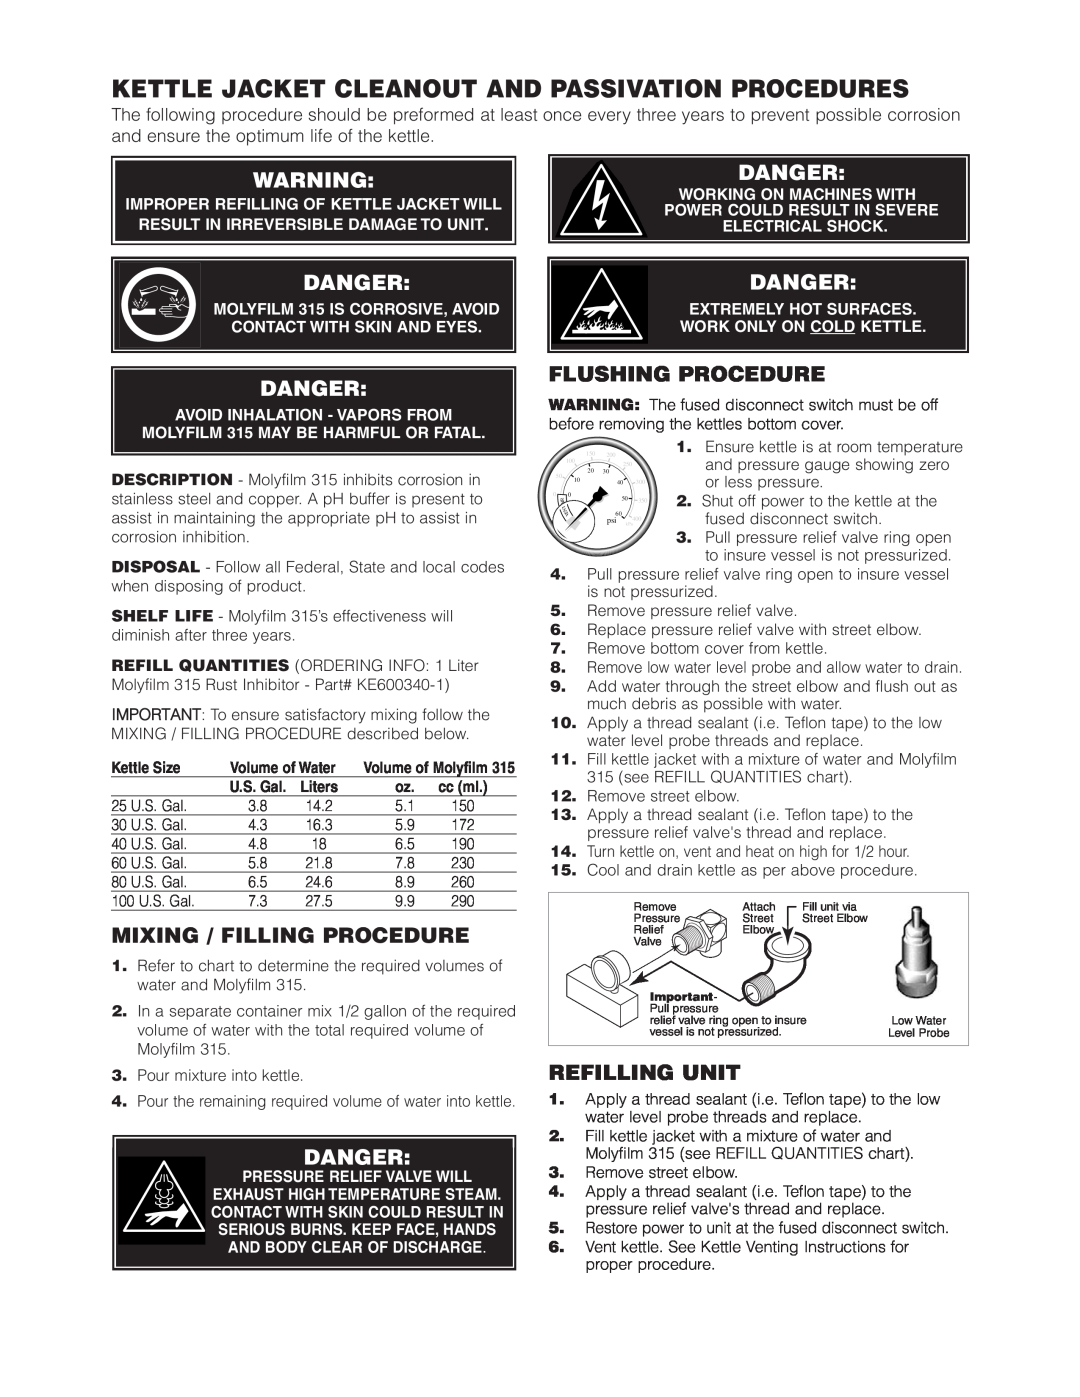 Cleveland Range KEL-100-T Kettle Jacket Cleanout And Passivation Procedures, Danger, Flushing Procedure, Refilling Unit 